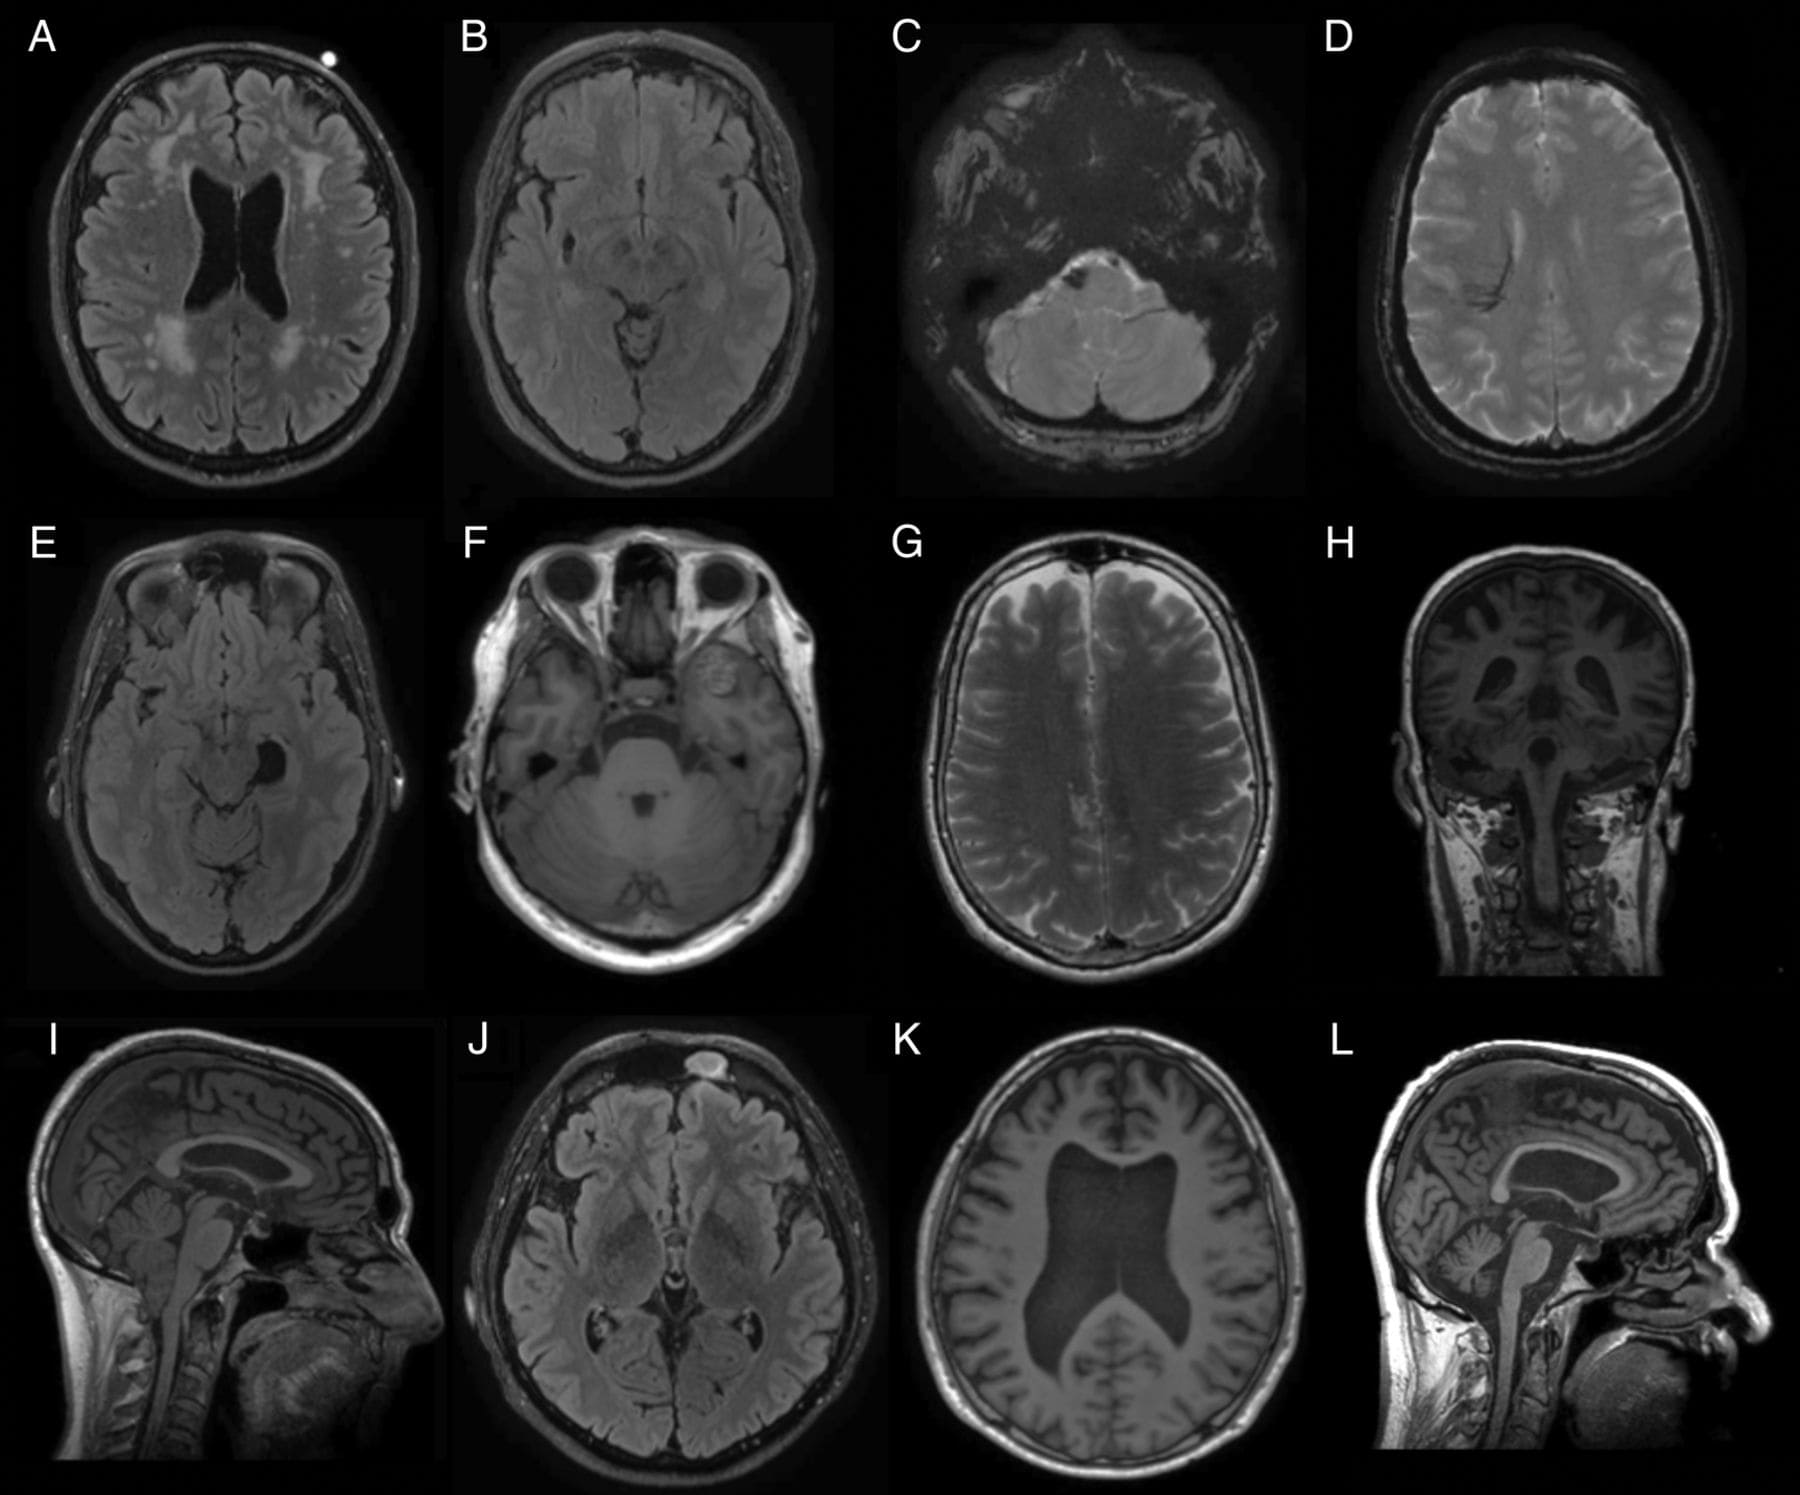 Мрт мозга опасно. Кт томограмма головного мозга. Компьютерная томография кт головного мозга. Рентгеновская компьютерная томография головного мозга. Магнито-резонансная томография головного мозга.